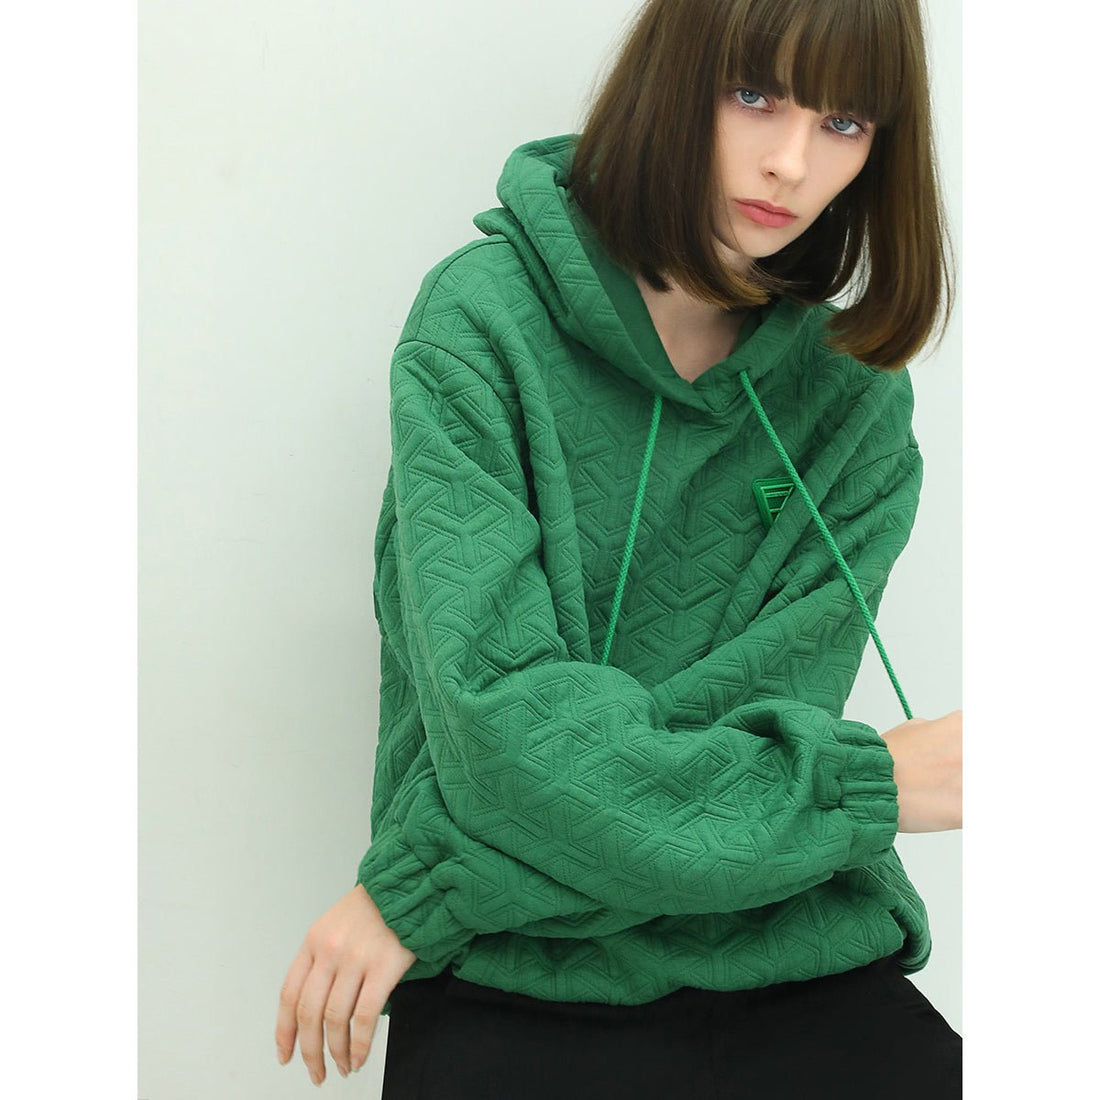 Geometry Jacquard Puff Sleeve Green Hooded Sweater - 0cm